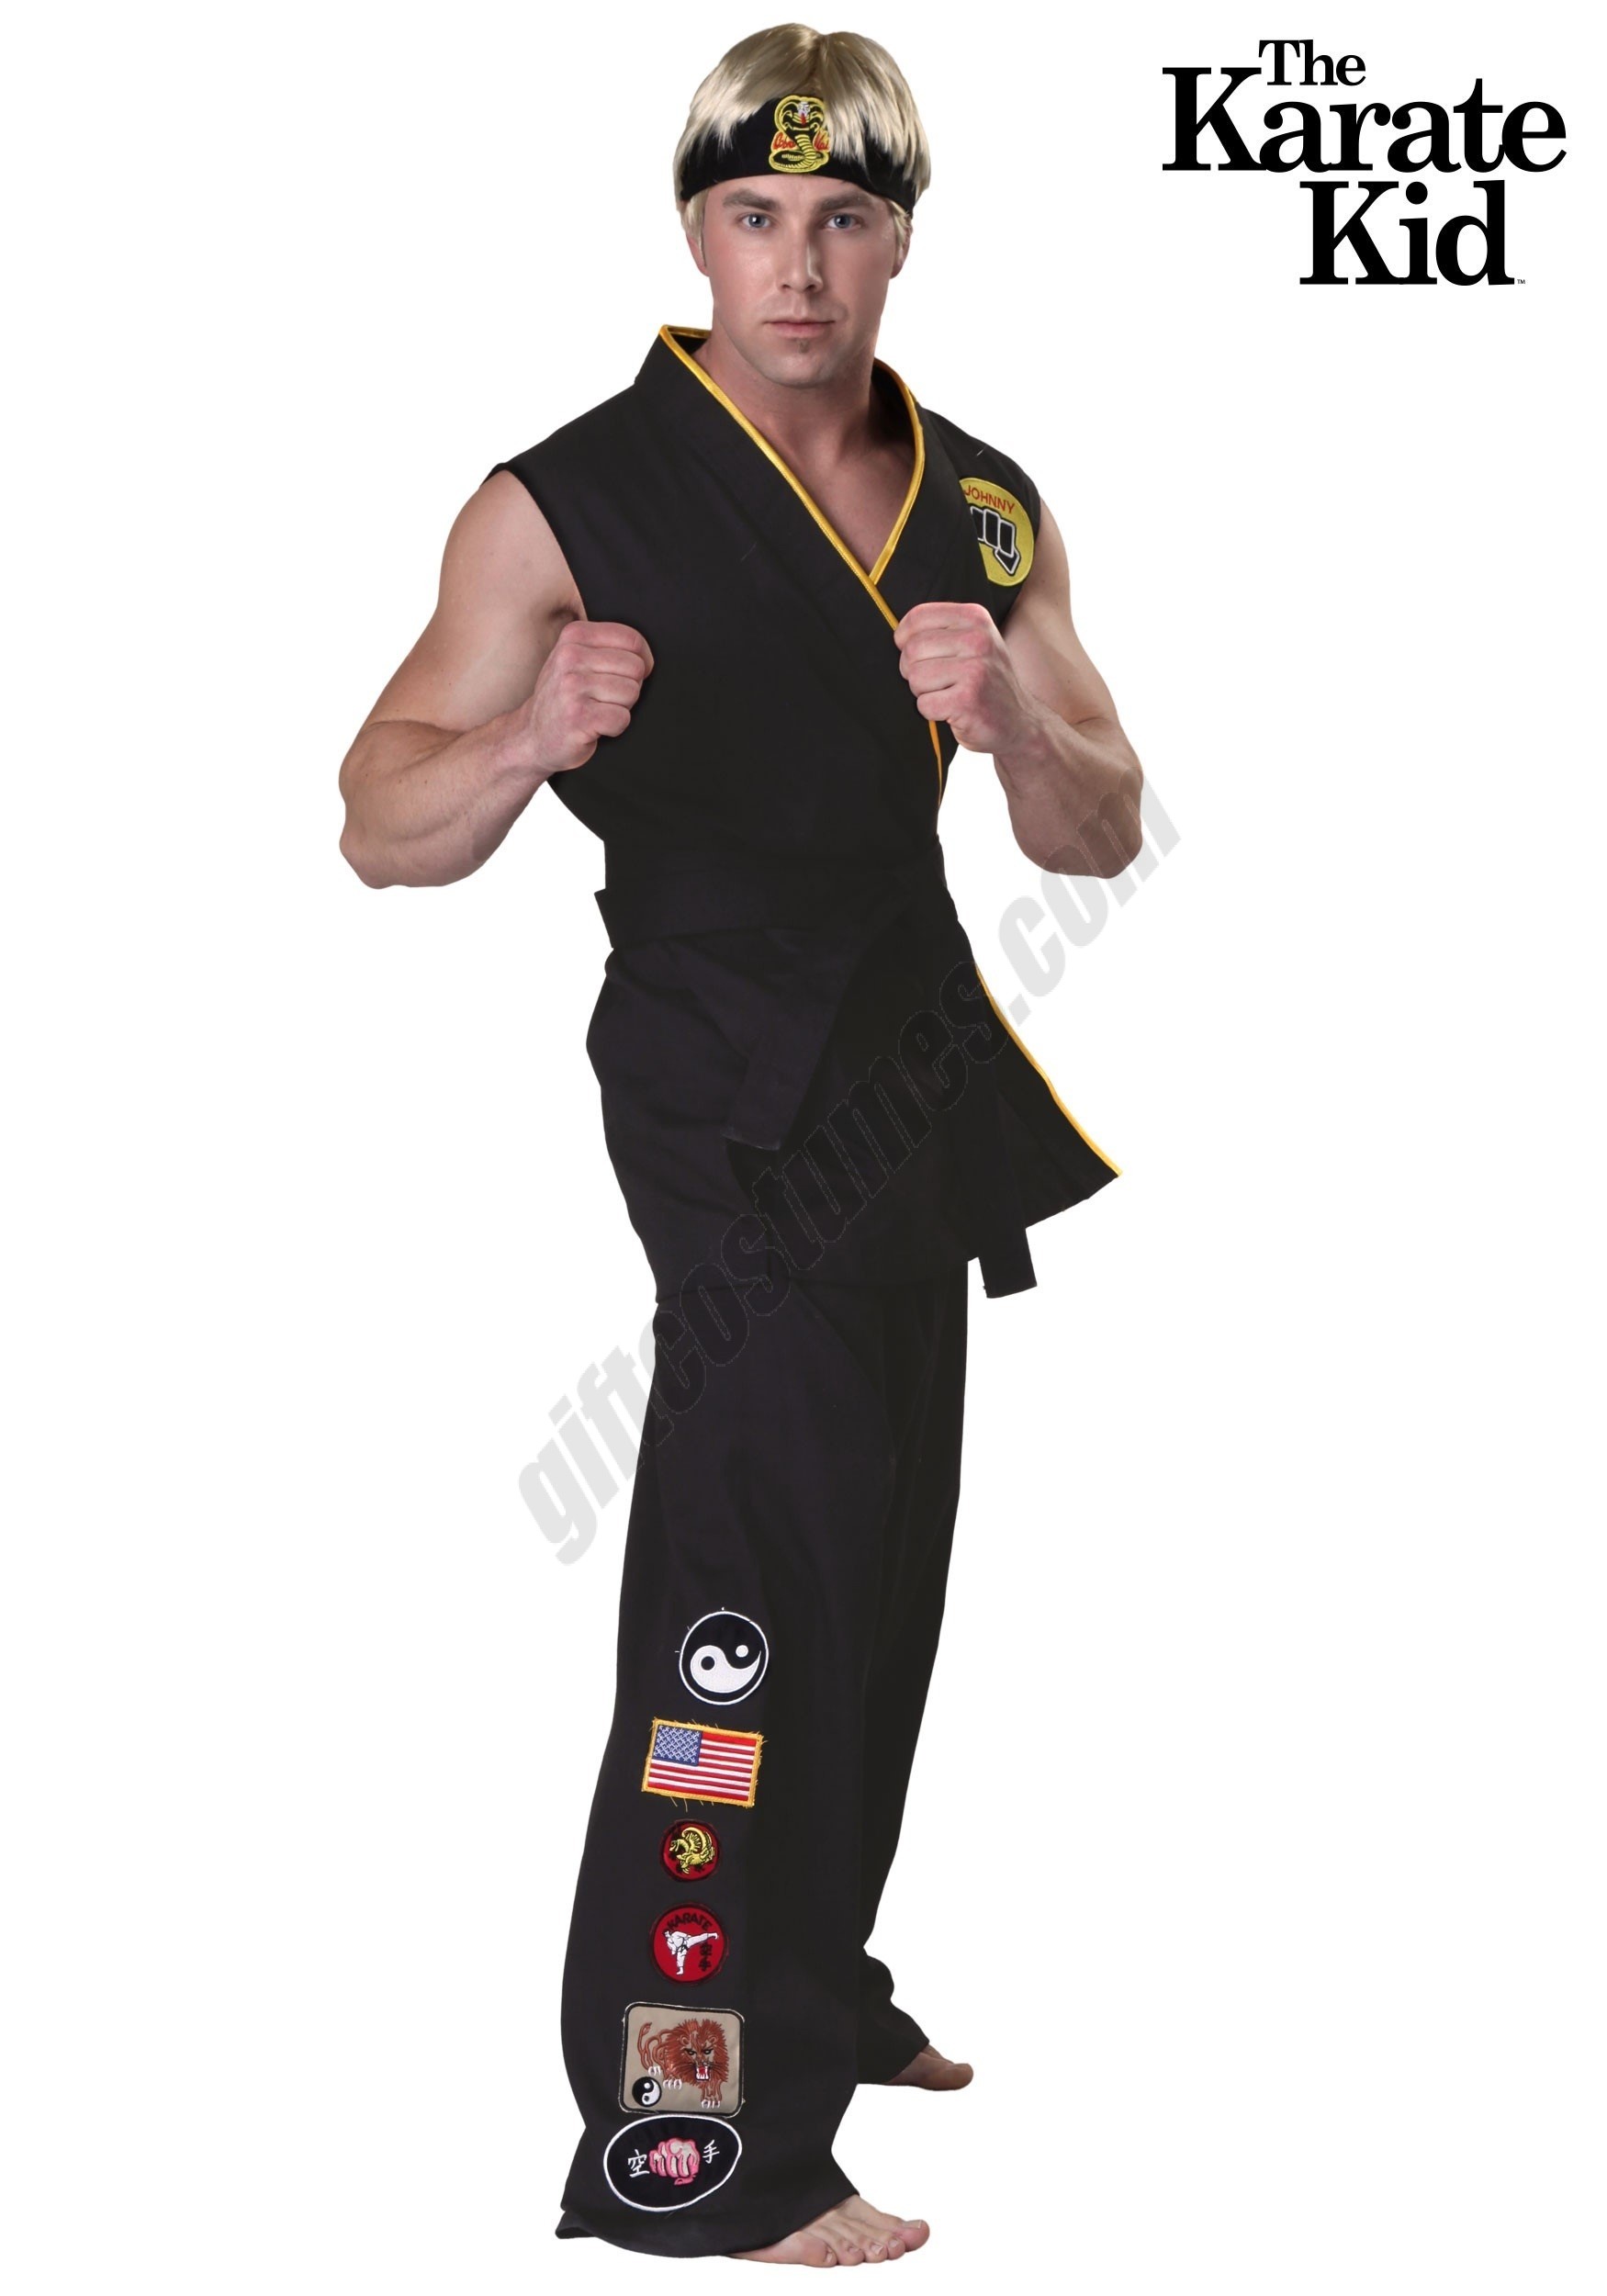 Authentic Karate Kid Cobra Kai Costume Promotions - Authentic Karate Kid Cobra Kai Costume Promotions